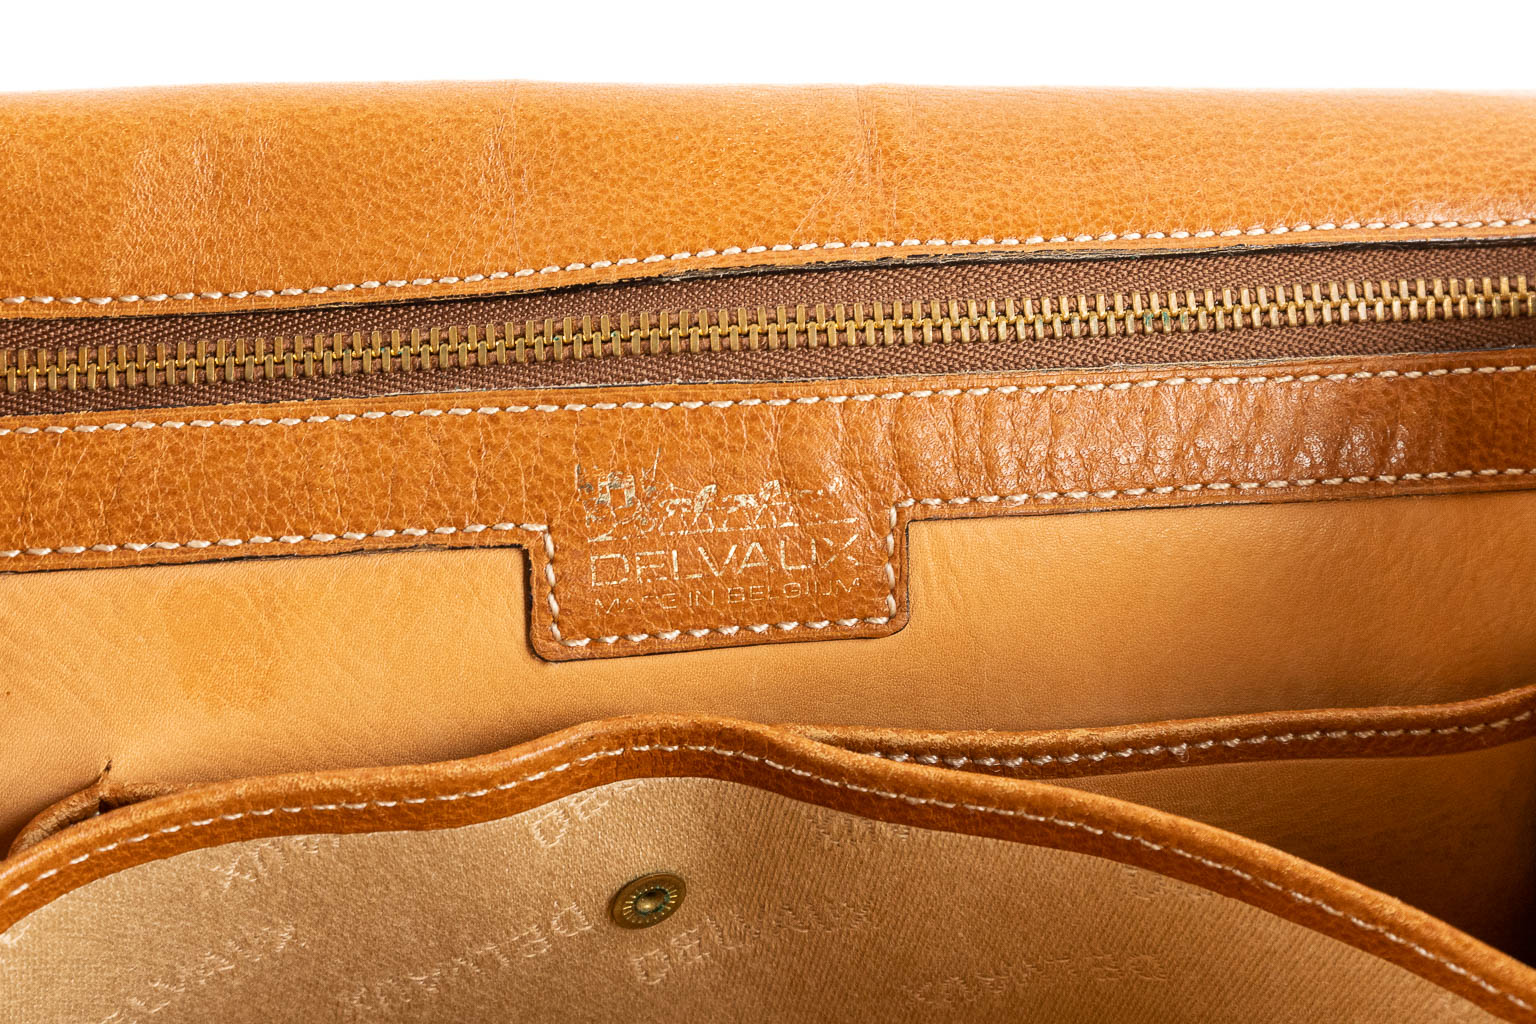 Delvaux, a brown leather handbag, original fabric storage bag. (W:32 x H:30 cm)